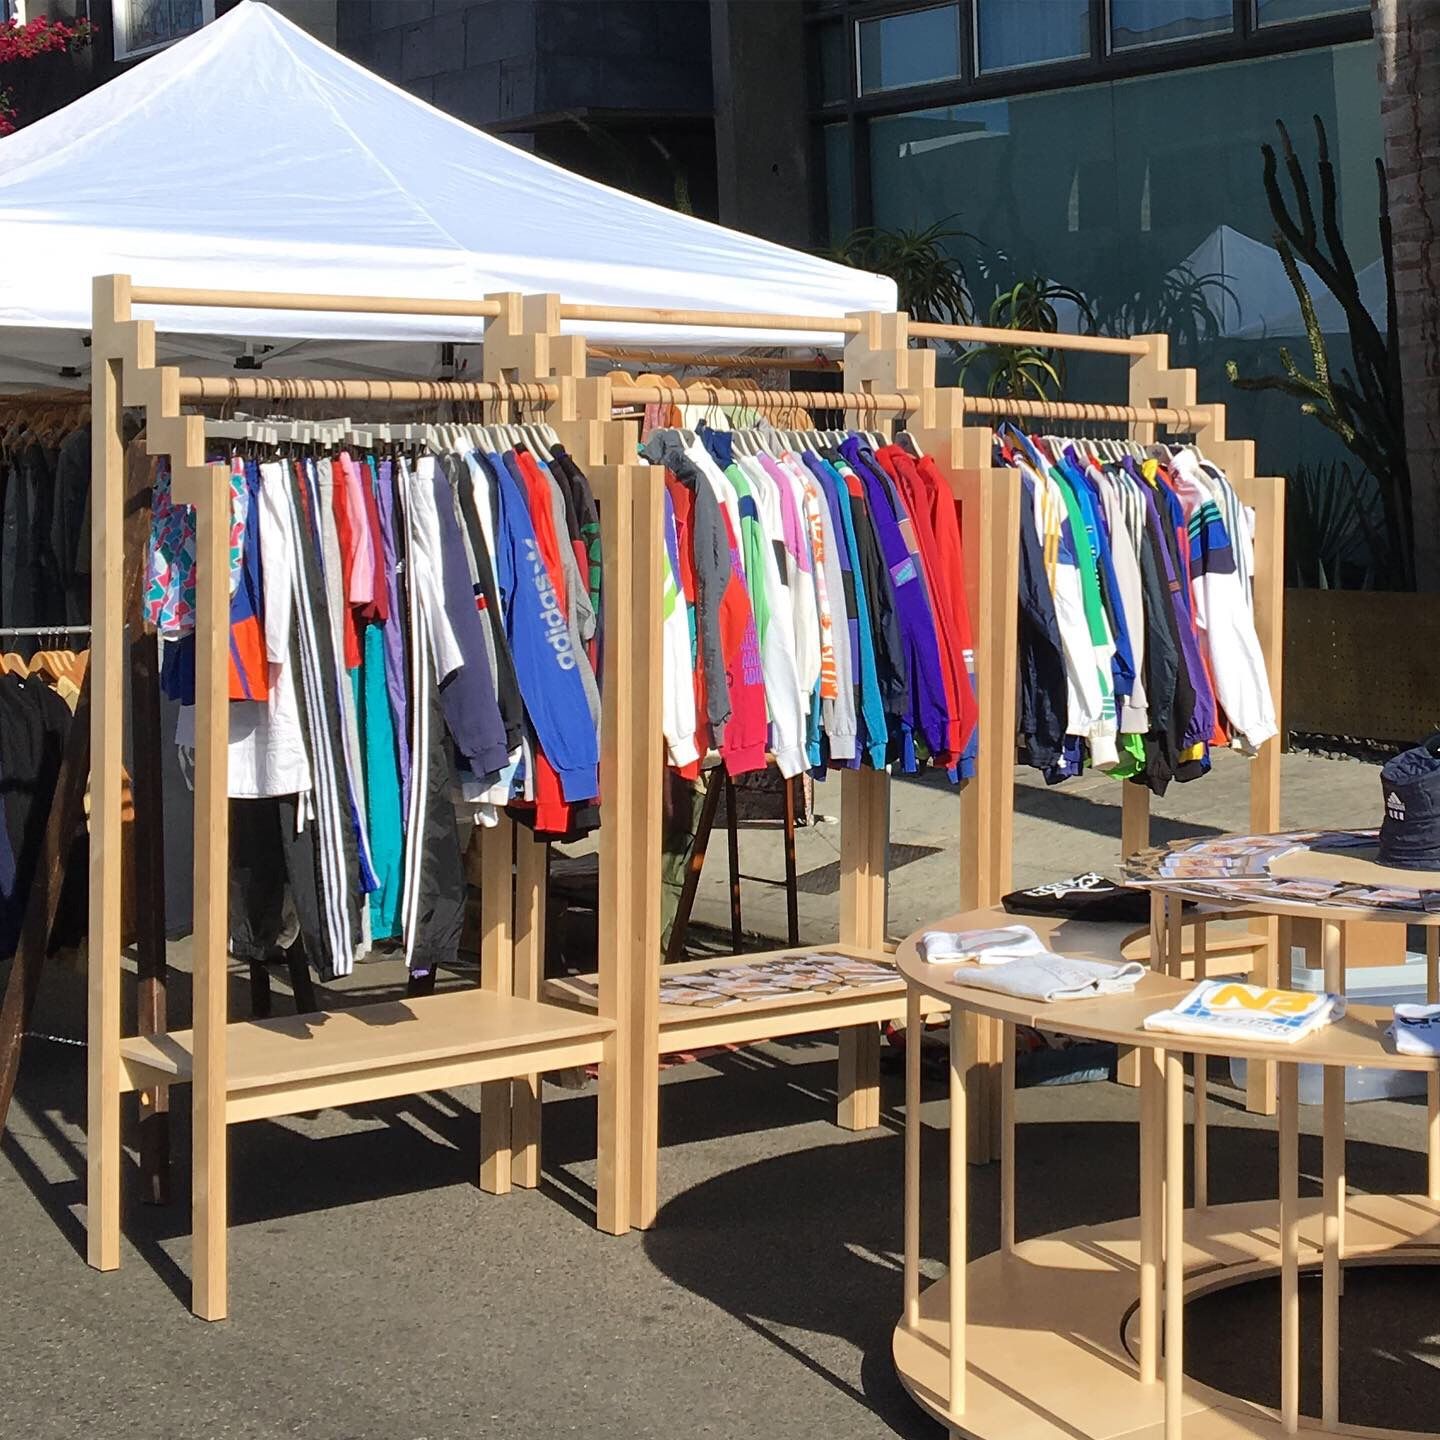  Clothing rack II - Owl Bureau x Adidas / Abbott Kinney Festival product image 0